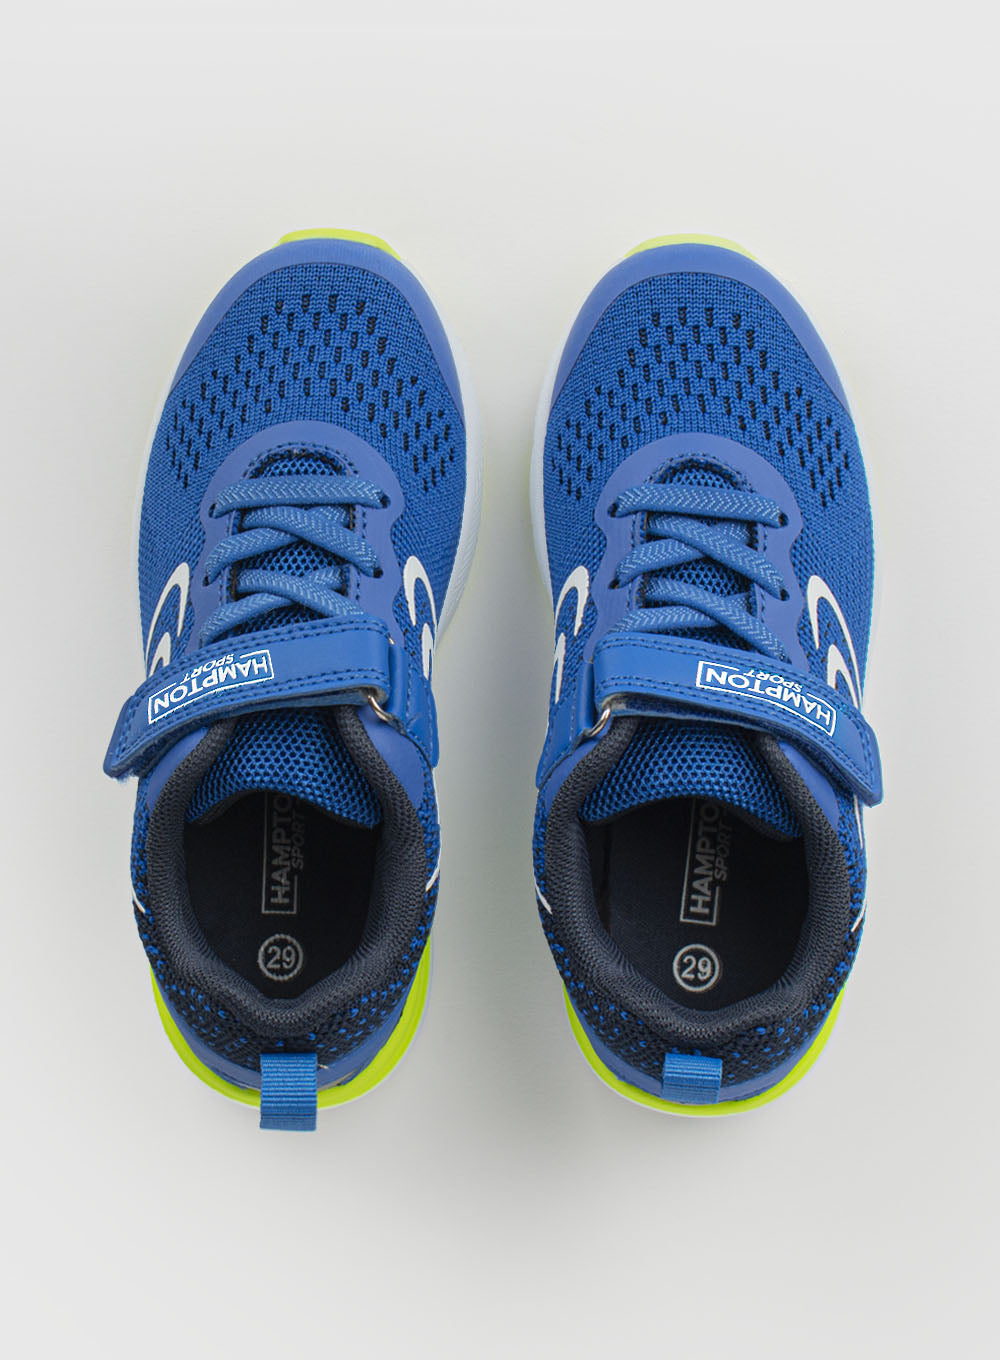 Hampton Sport Bolt Sneakers in Royal Blue